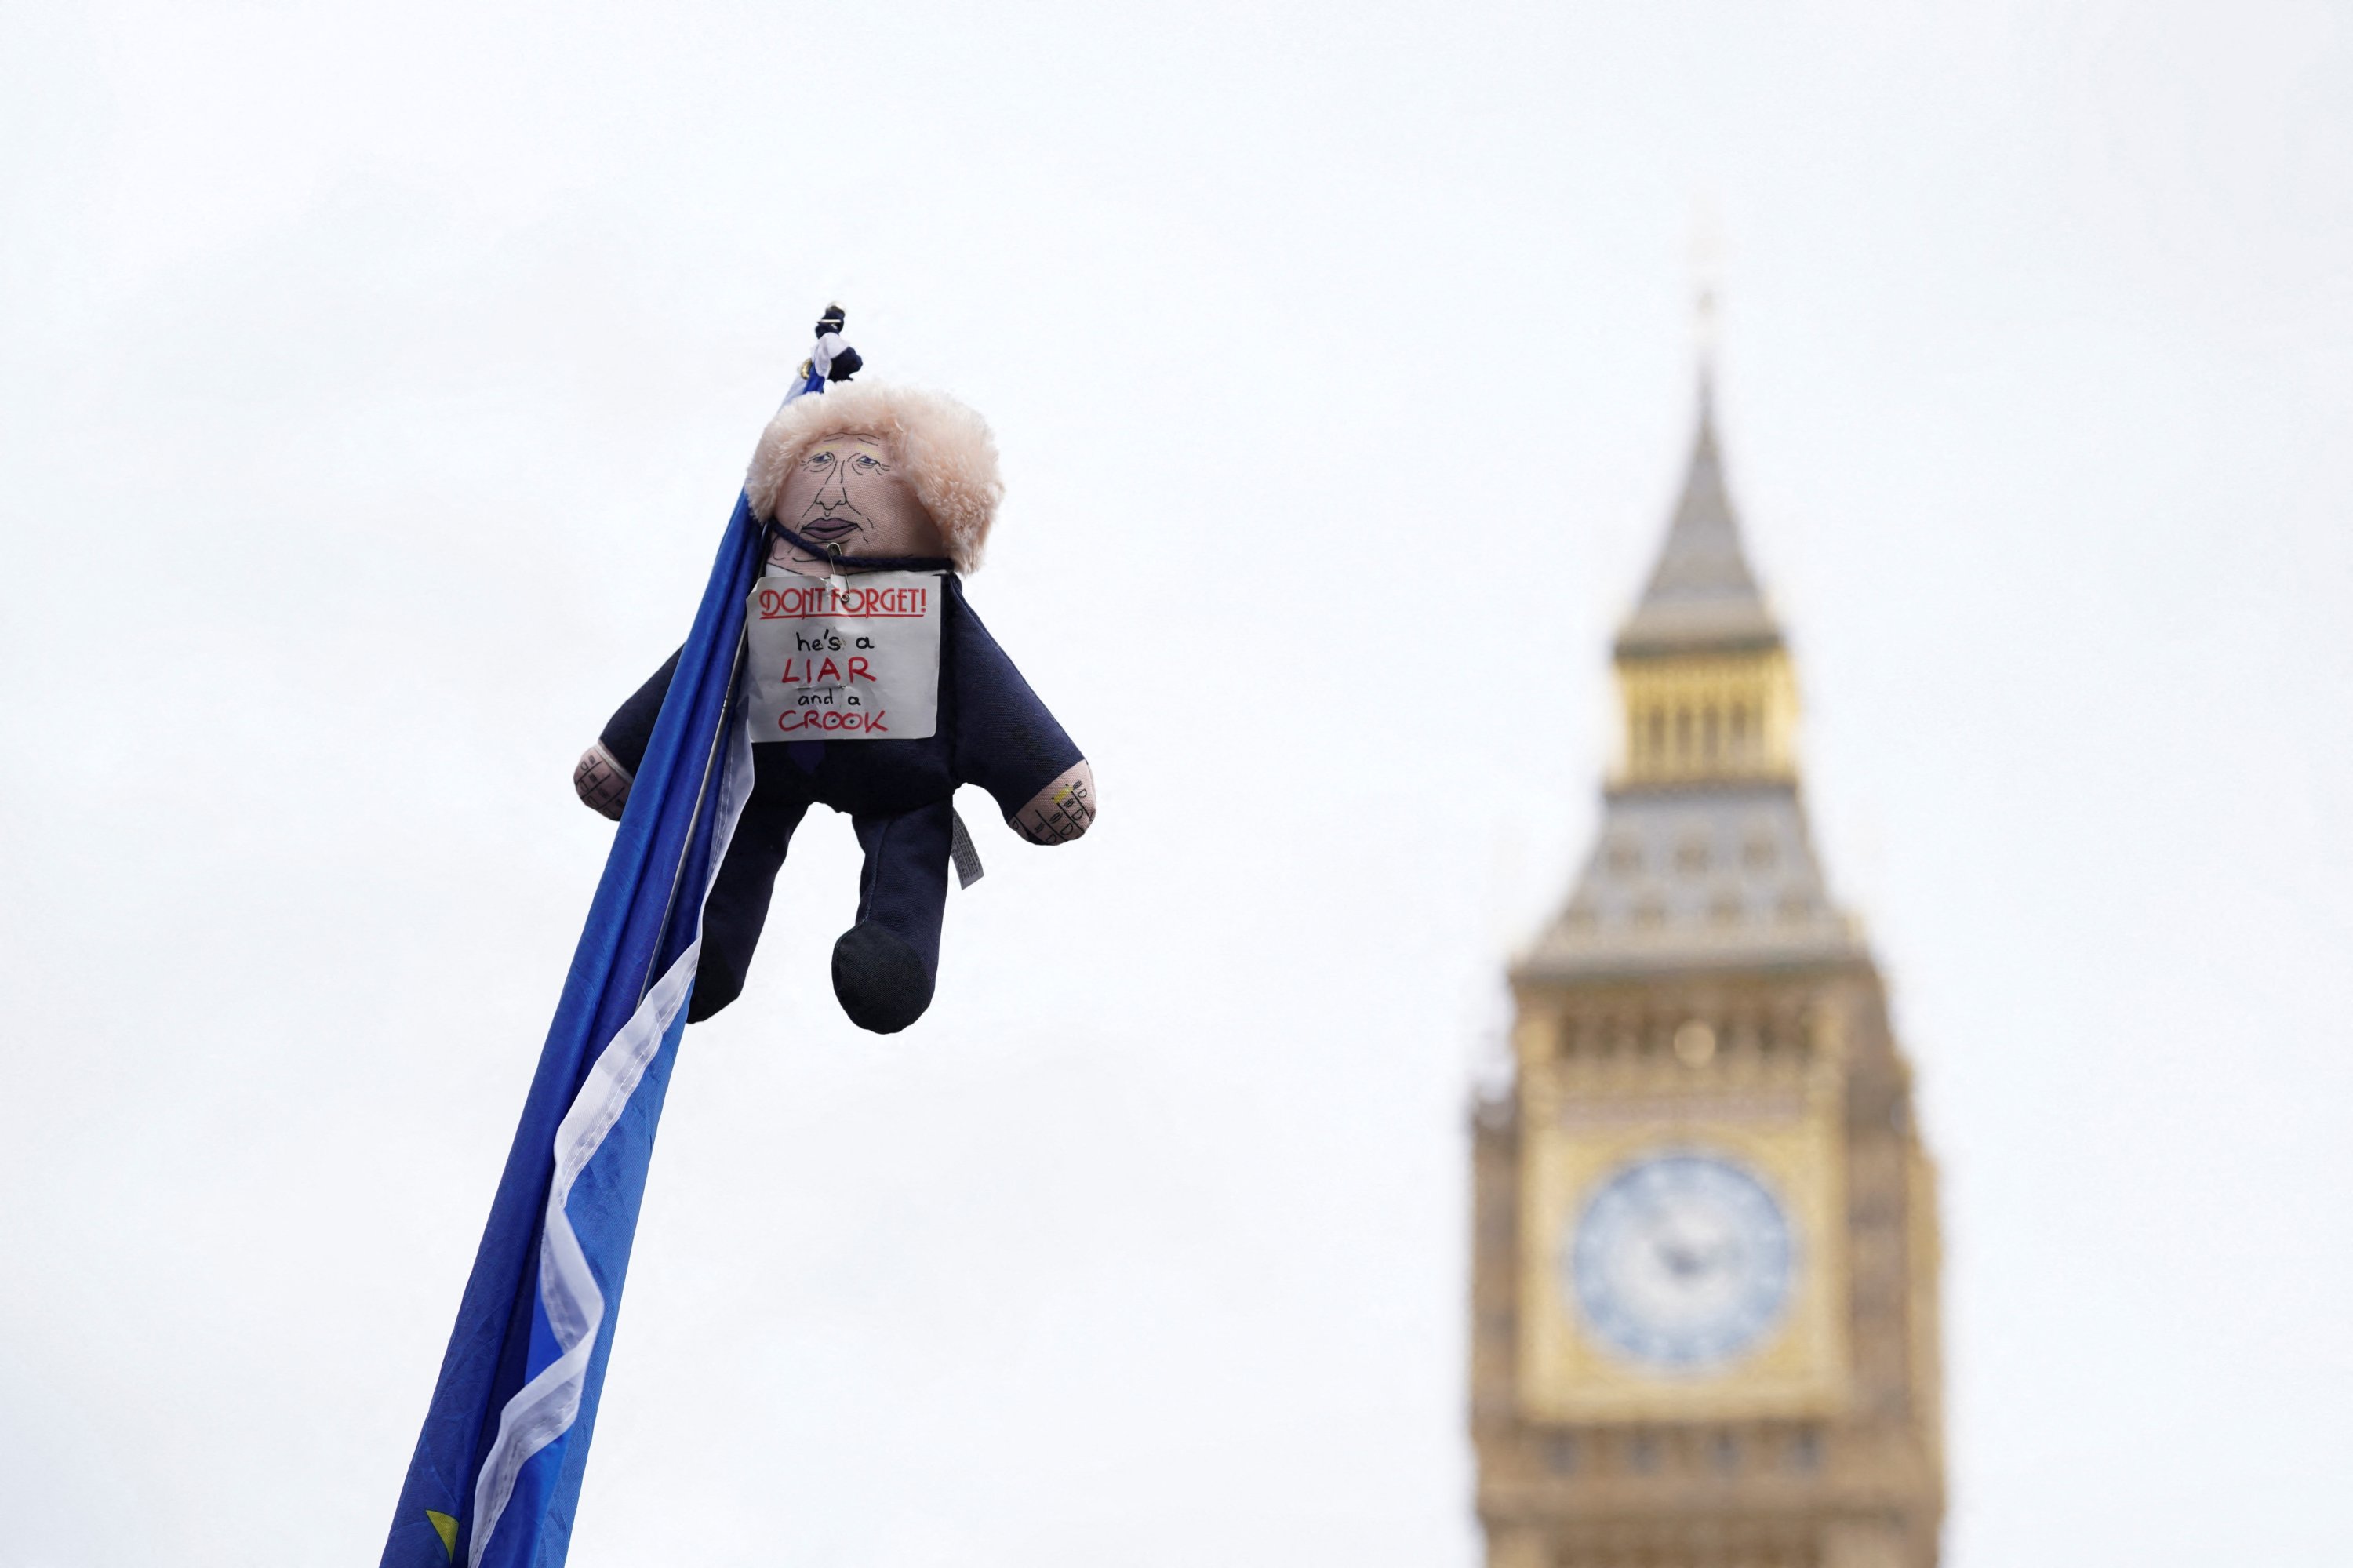 Boneka yang menggambarkan mantan Perdana Menteri Inggris Boris Johnson terlihat dengan Big Ben di latar belakang selama pawai menyerukan Inggris untuk bergabung kembali dengan Uni Eropa, di London, Inggris, 22 Oktober 2022. (Foto Reuters)